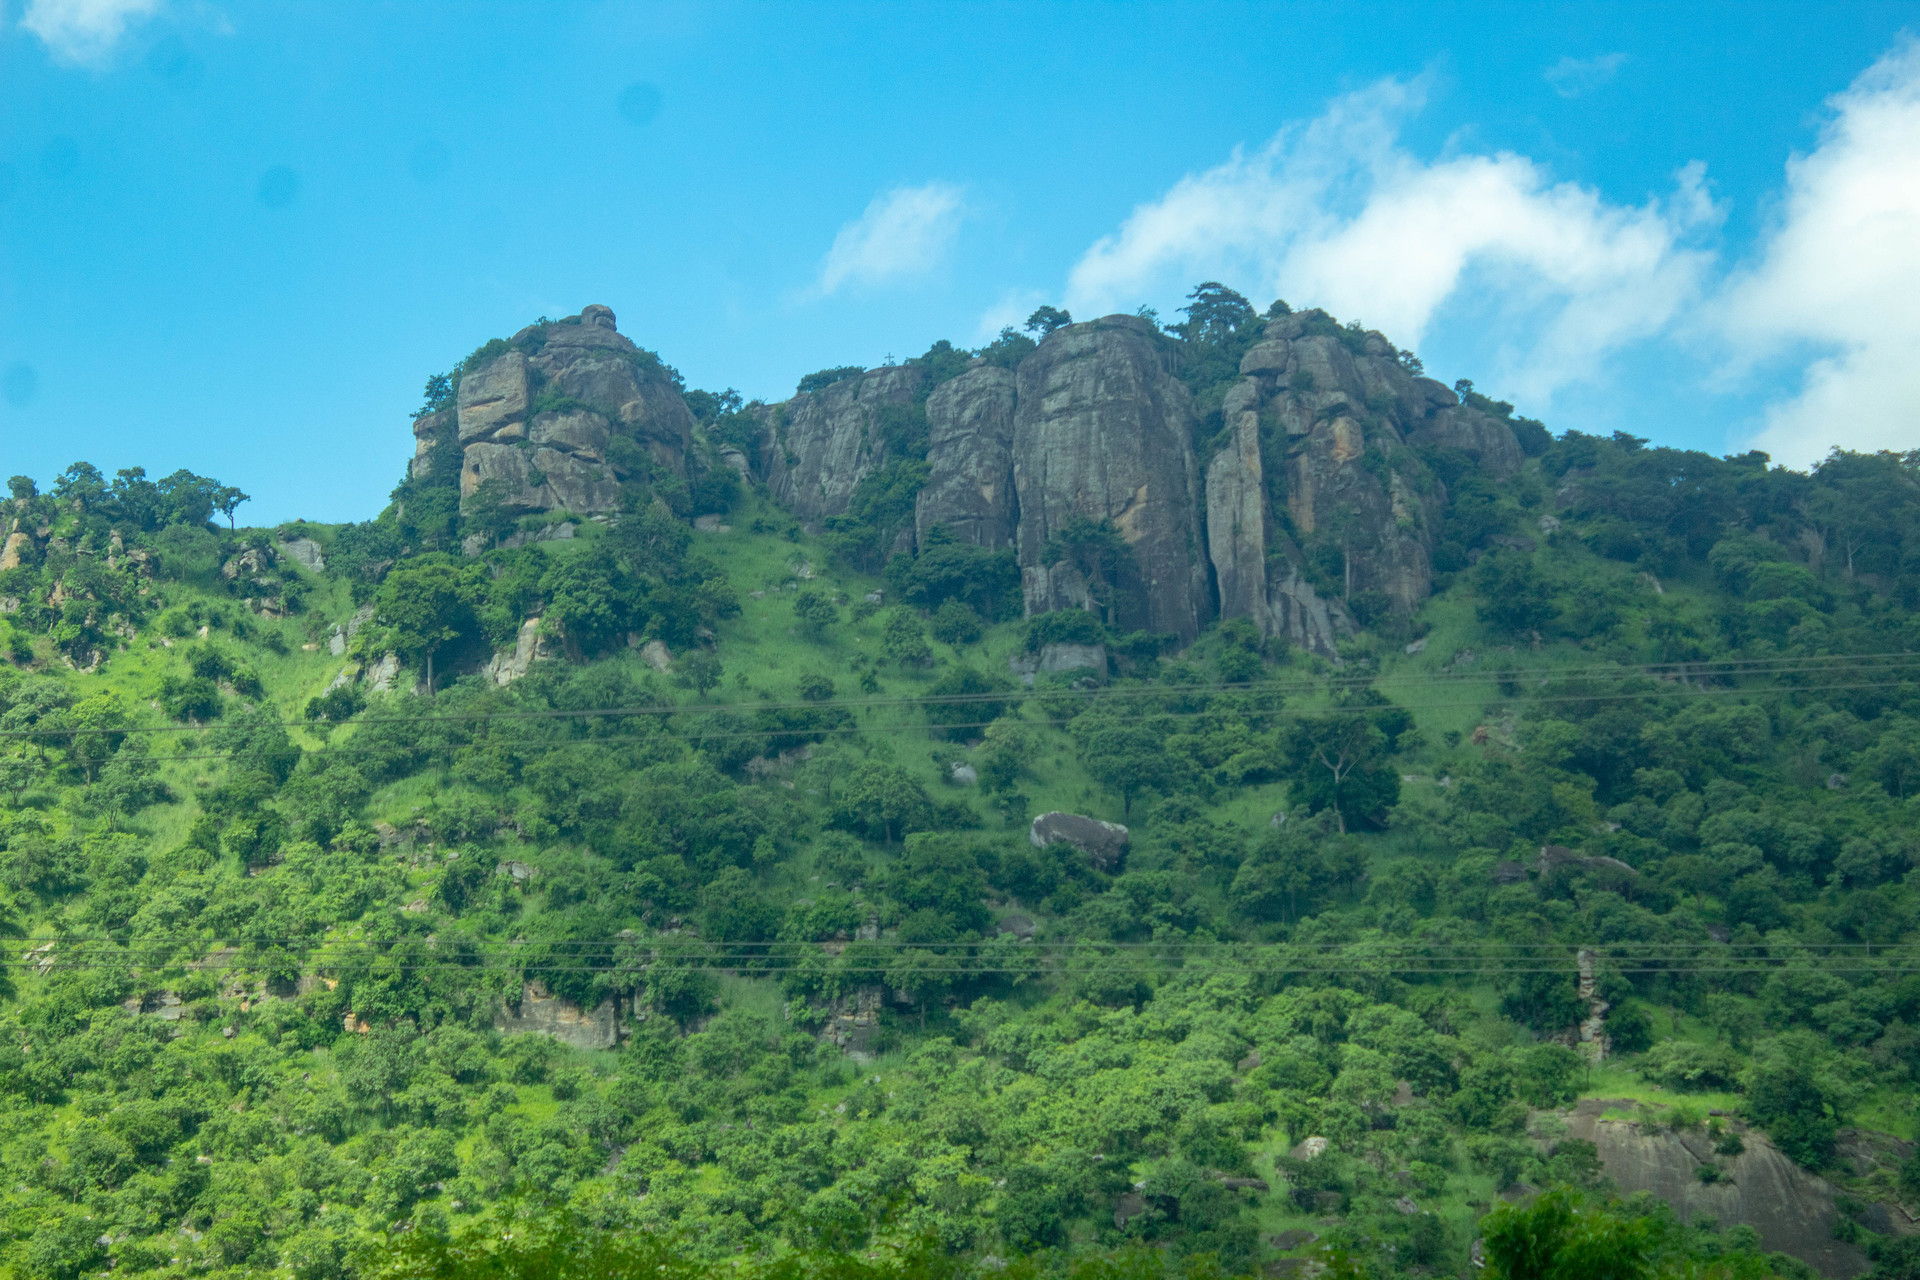 https://www.thebrewshow.net/wp-content/uploads/2022/05/b317-p1478-mount-krobo-travel-guide-krobo-hills-ghana.jpg